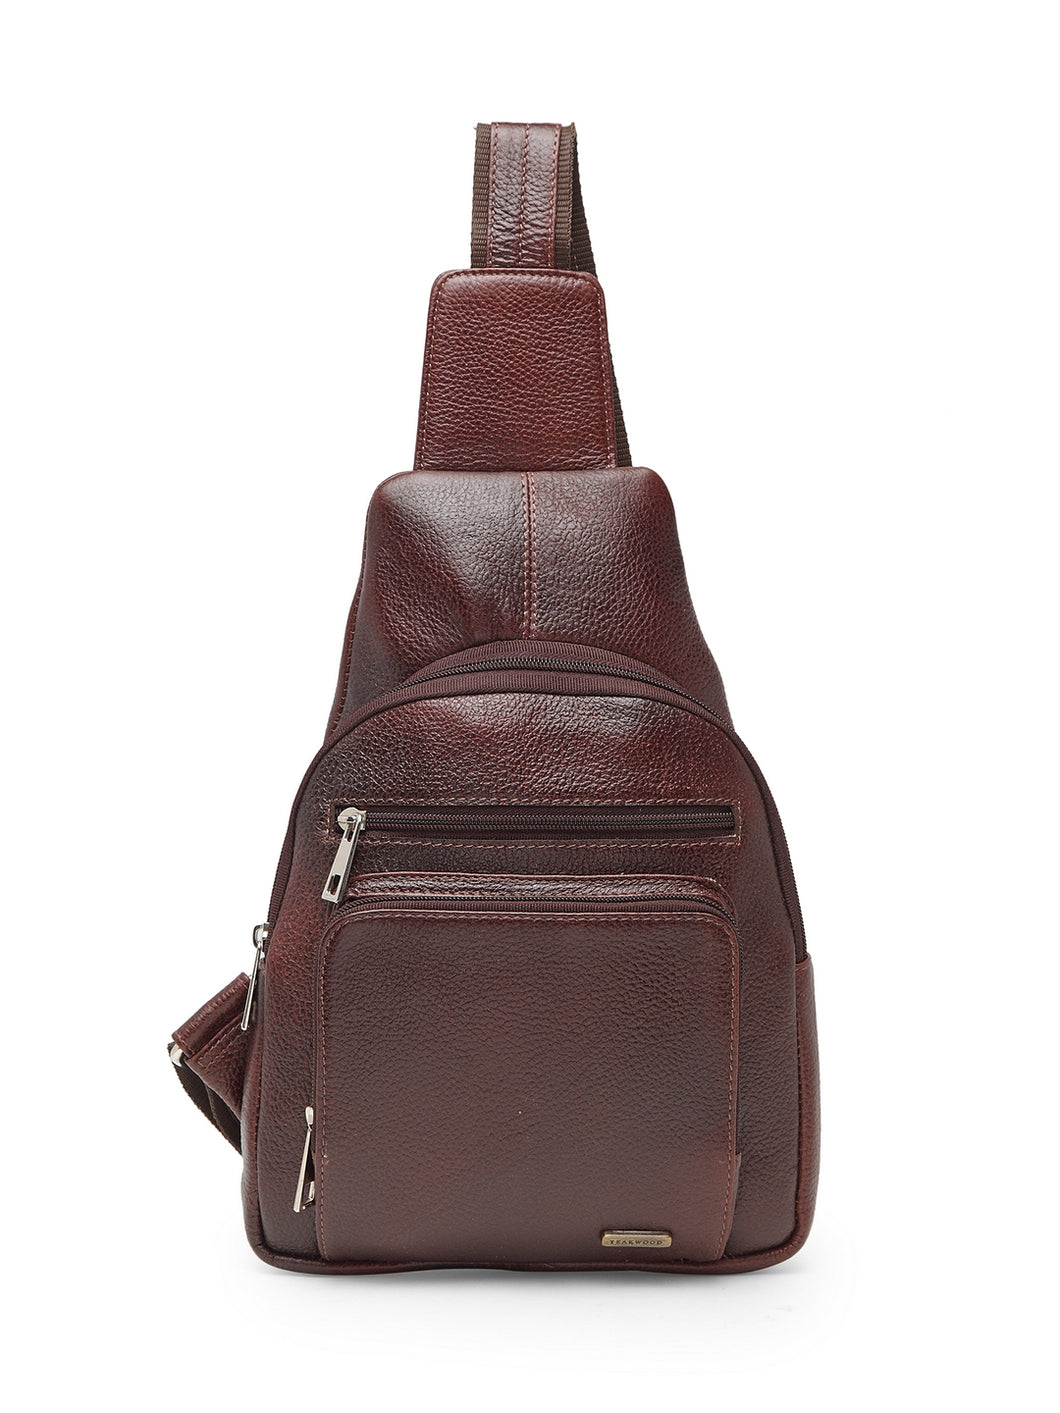 Teakwood Genuine Leather Cross Body Sling Messenger Bag || Lightweight Backpack Chest Shoulder Bags for Travelling, Hiking, Cycling (Dark Brown)